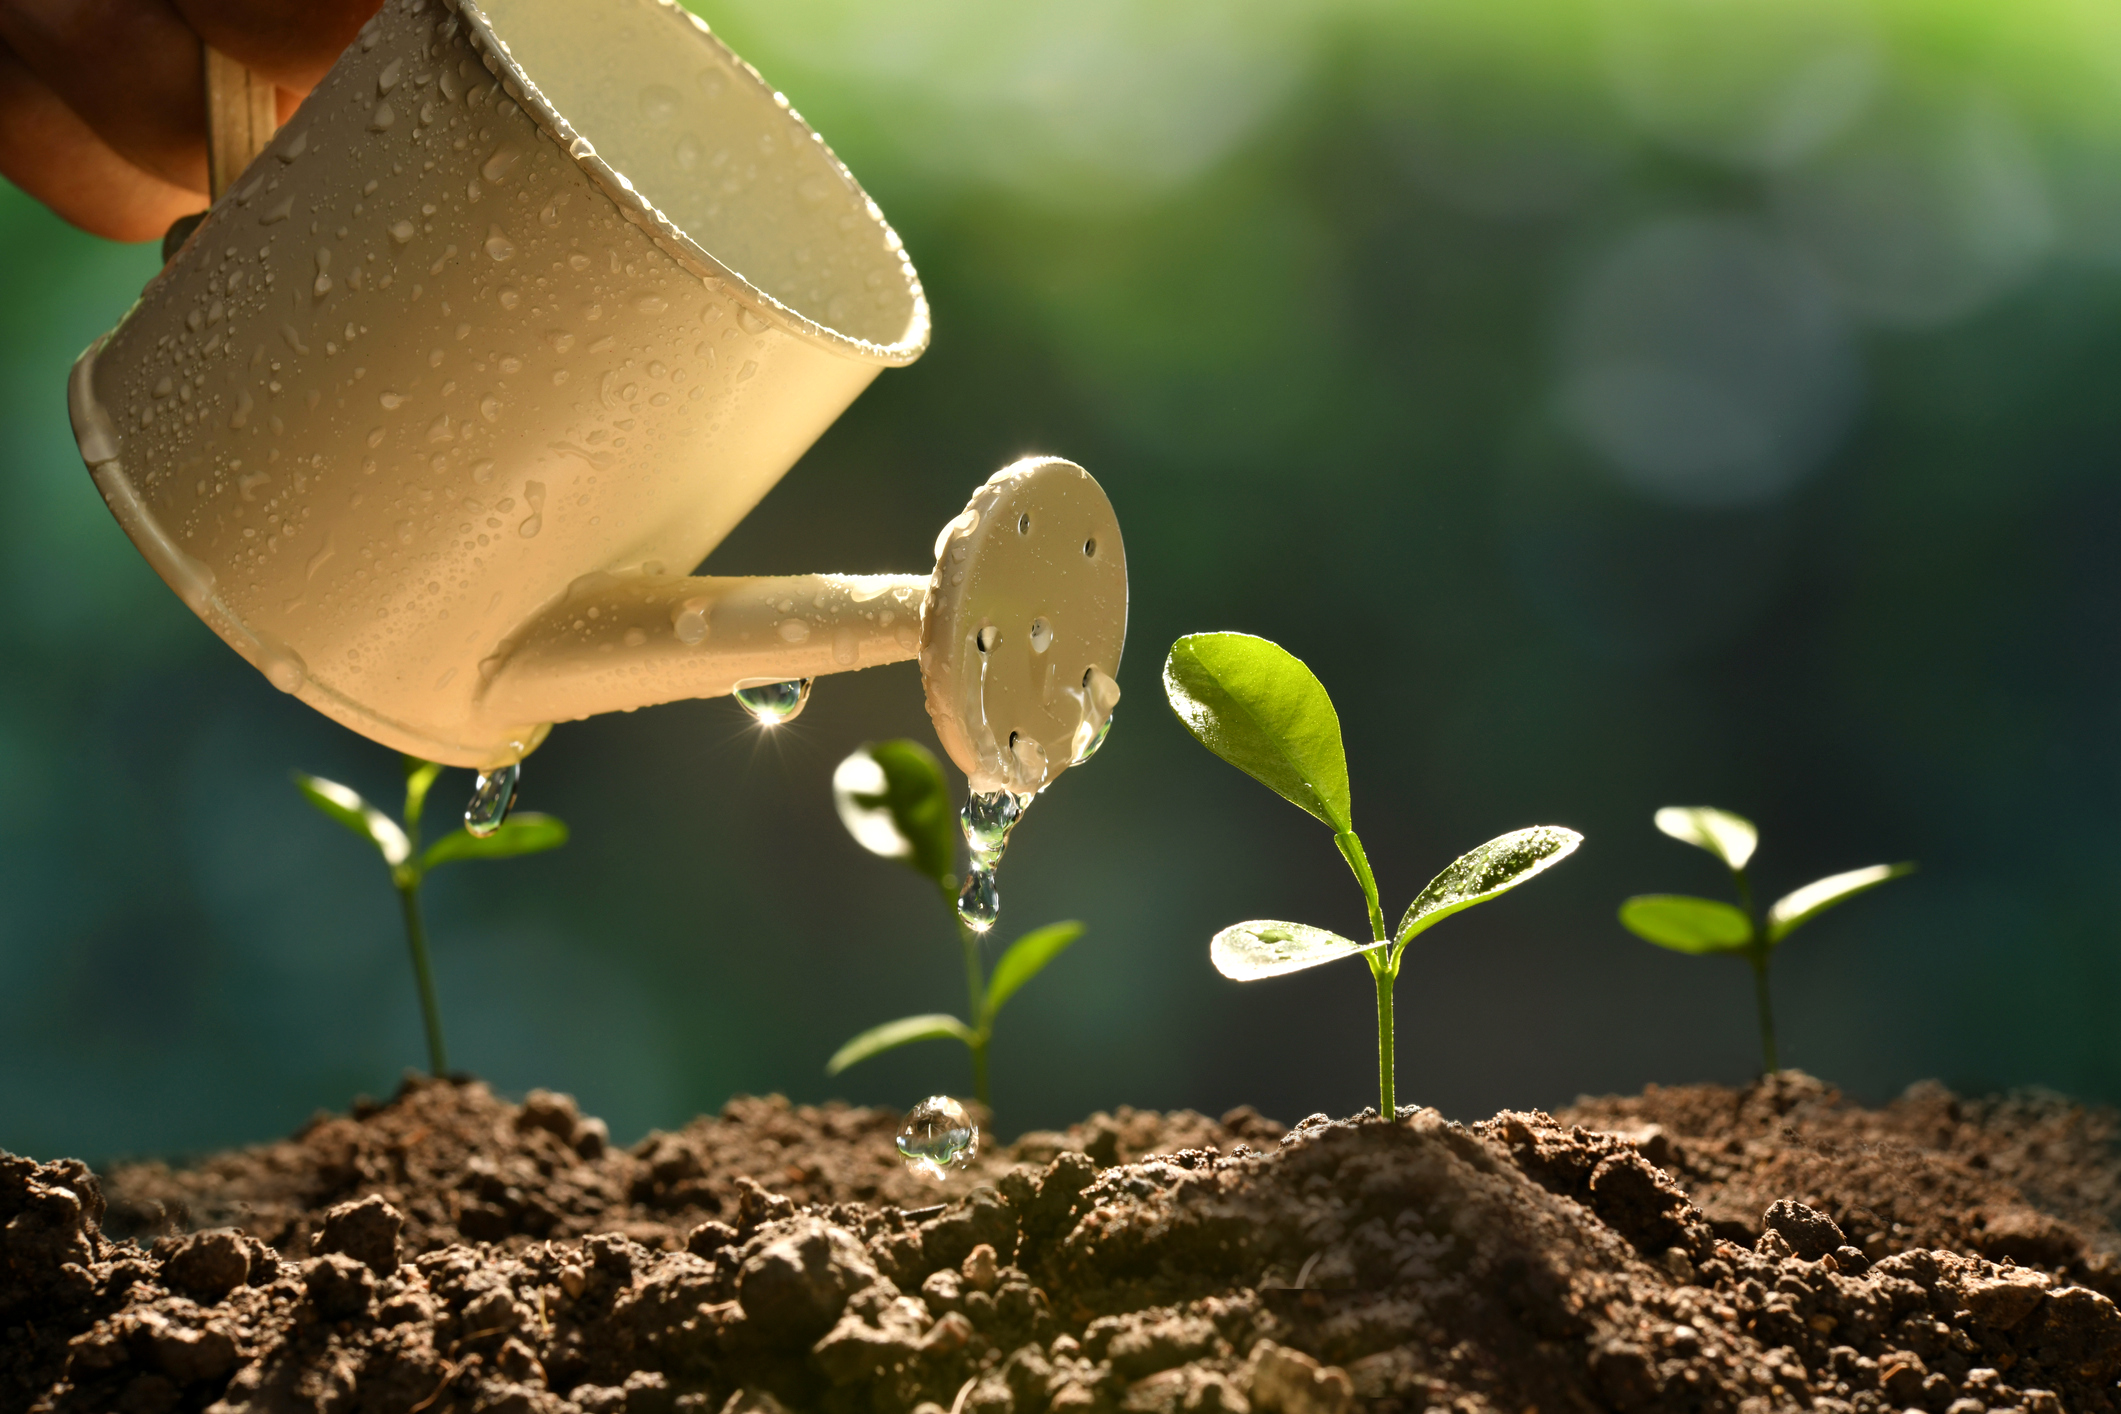 Plant Growth & Development - Factors Affecting Plant Growth